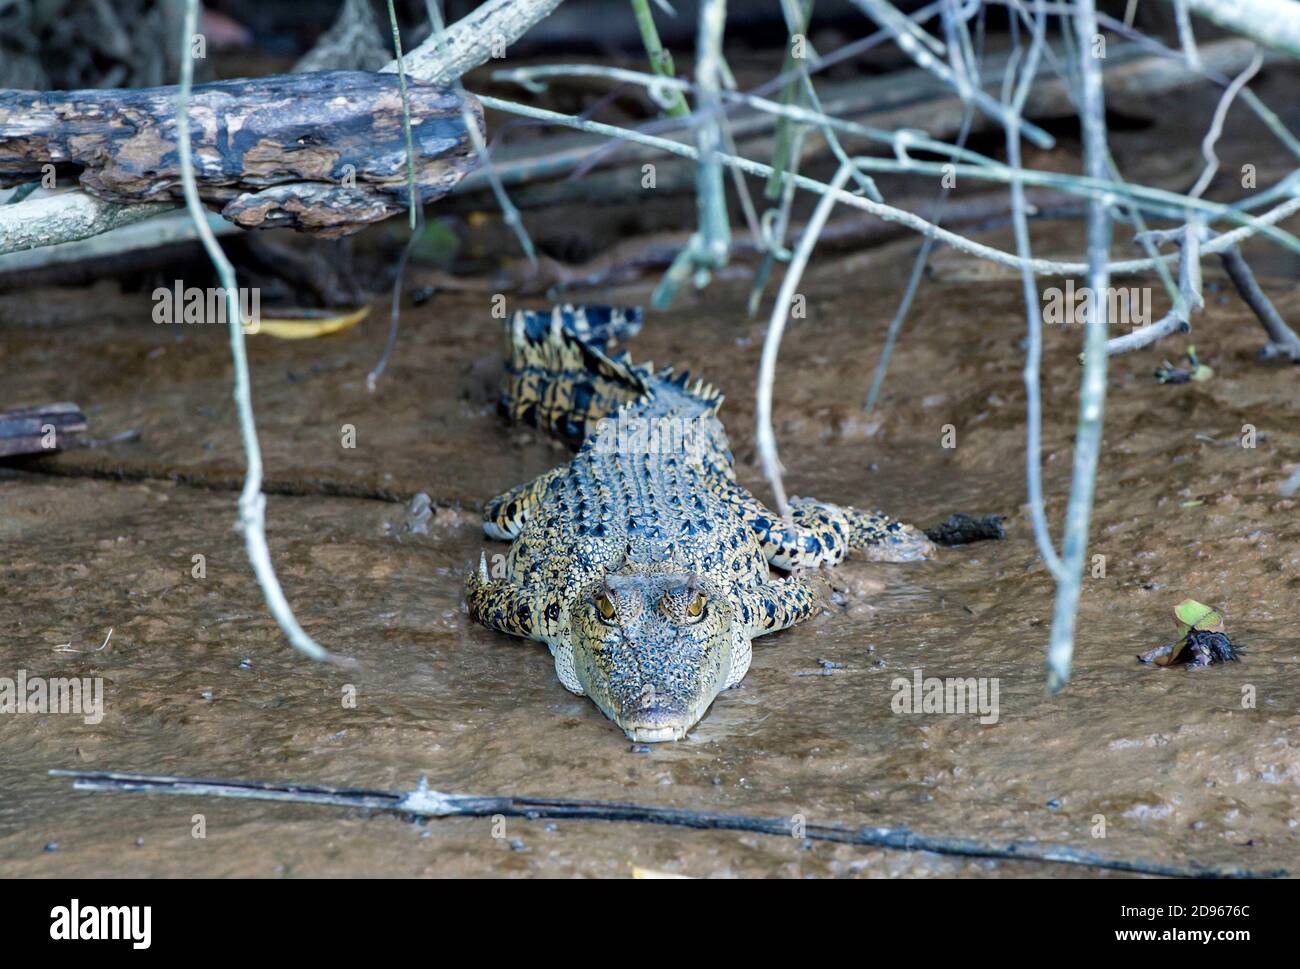 Saltwater crocodile (Crocodylus porosus), Kinabatangan river flood plain, Sabah, Borneo, Malaysia. Stock Photo